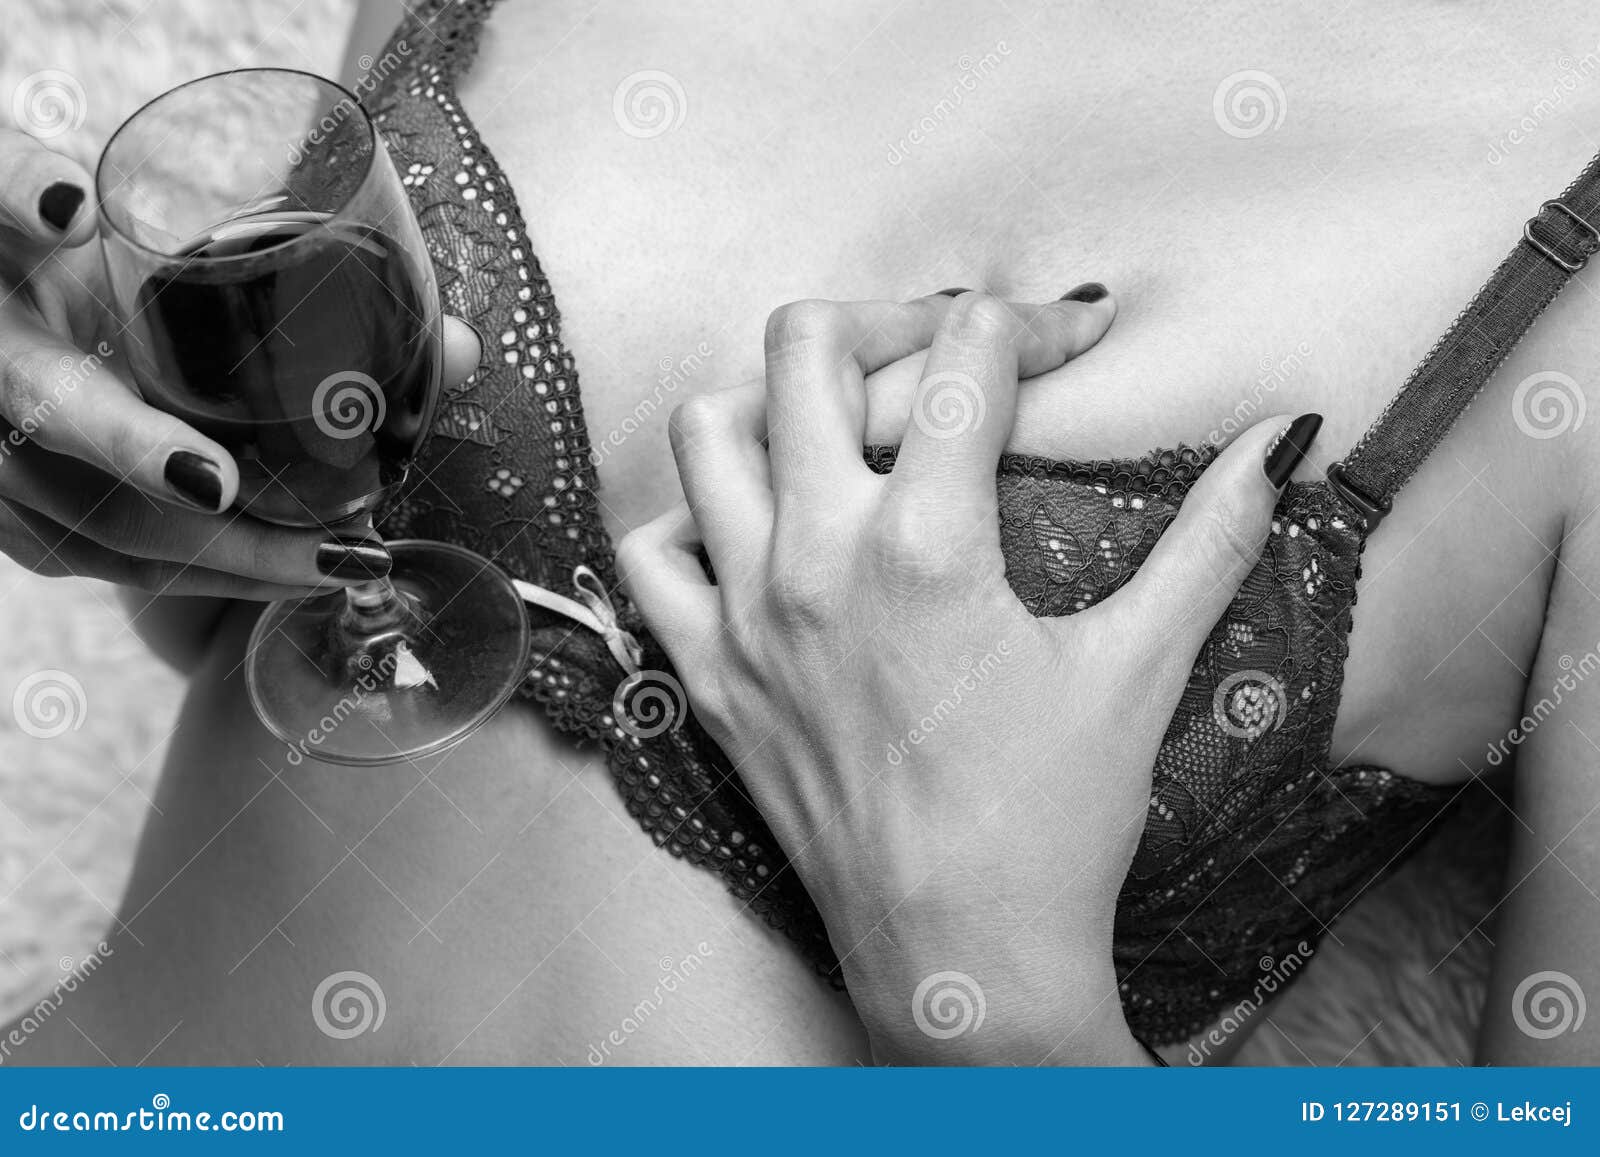 я пьянею на женской груди (120) фото